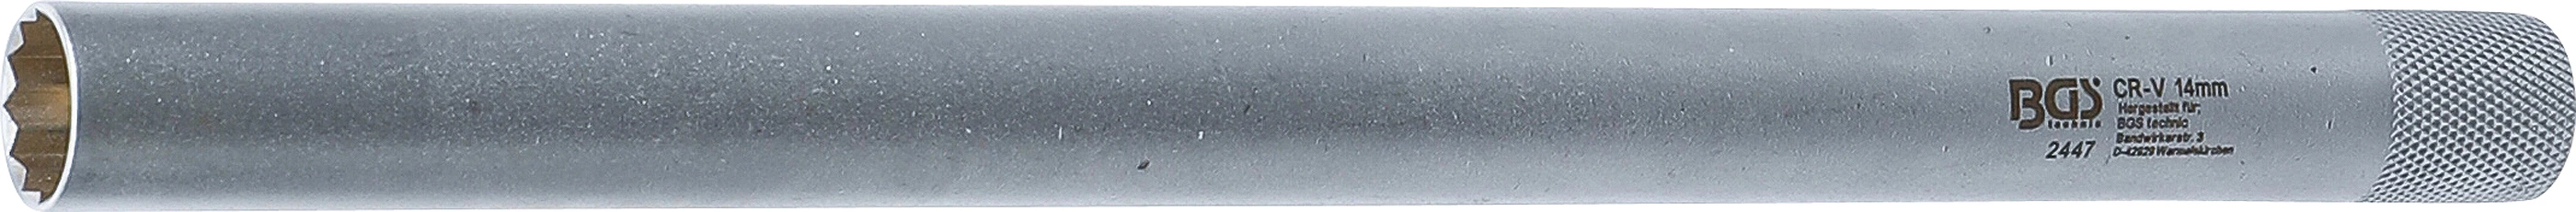 Zündkerzen-Einsatz mit Magnet, Zwölfkant, extra lang - 3/8" 14 mm